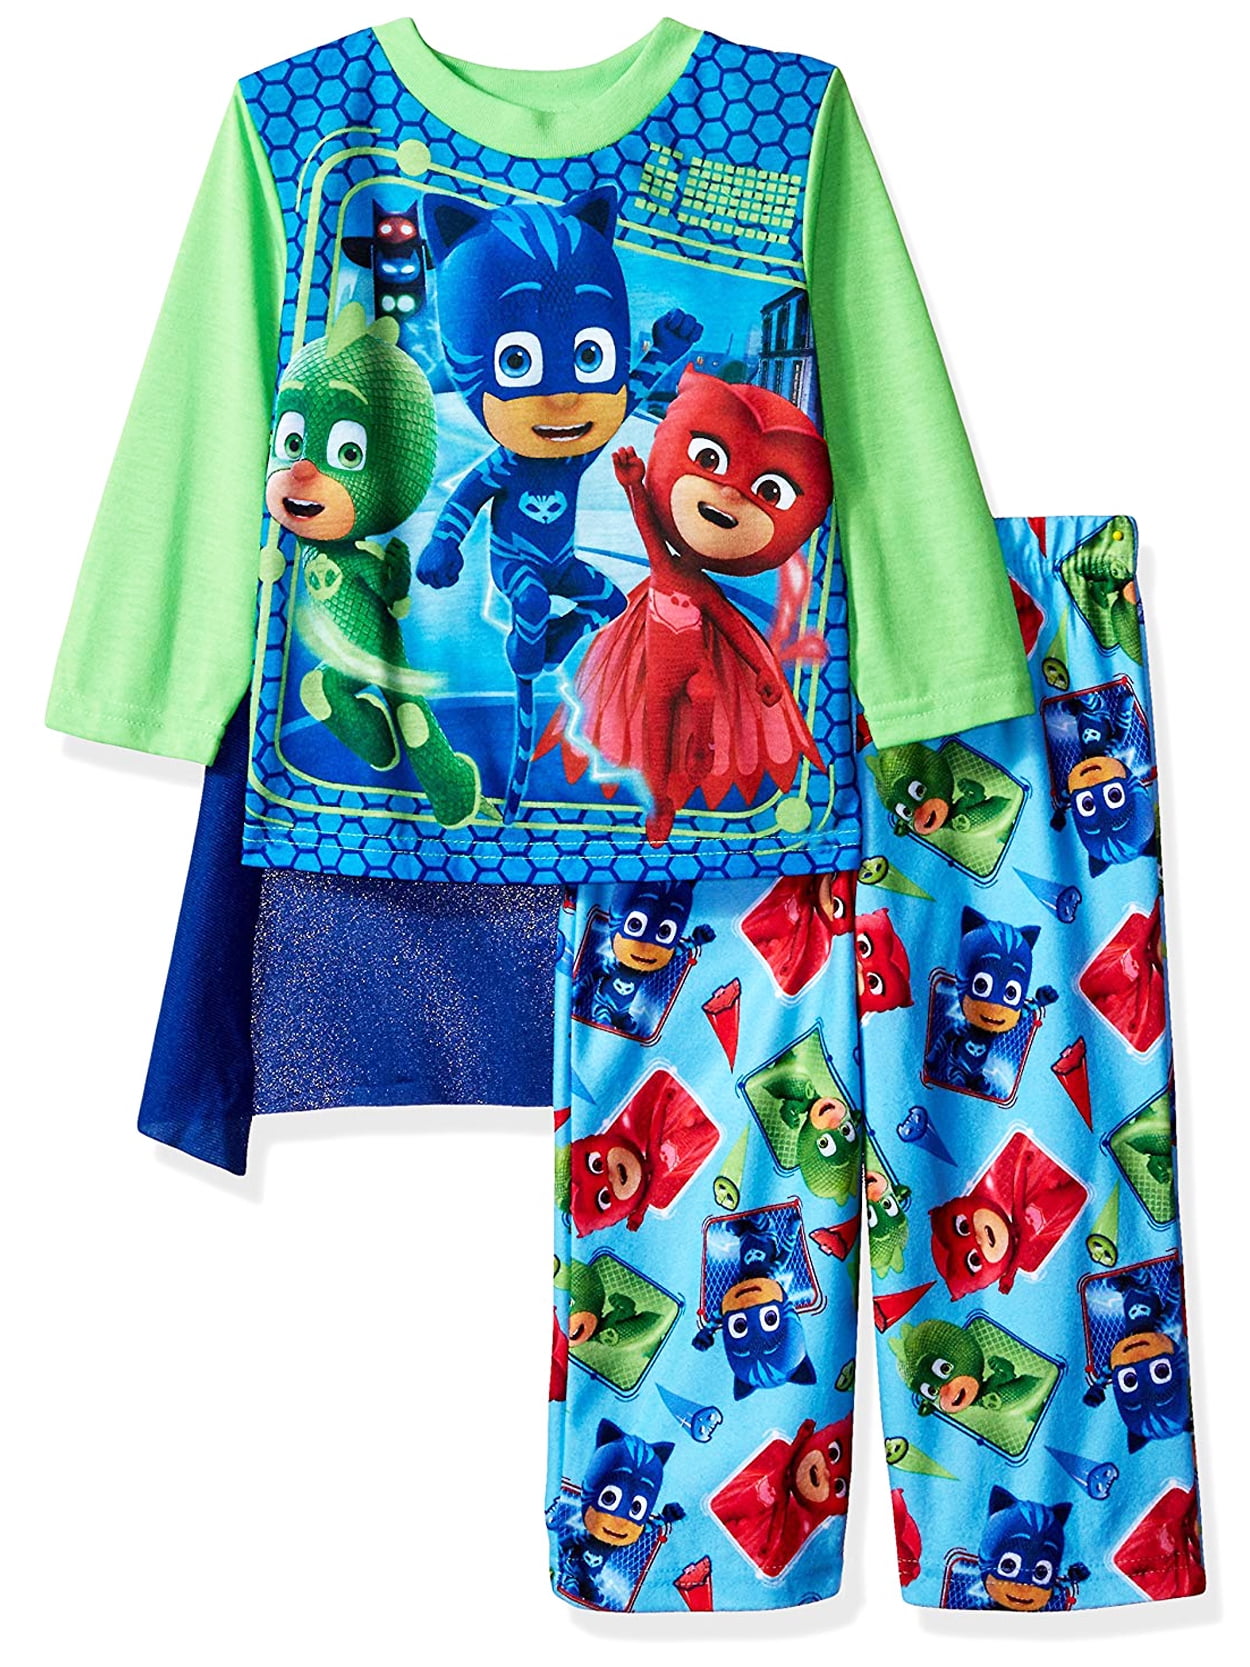 Kids PJ Masks All In One Micro Fleece Sleep Suit Pyjamas Nightwear For Boys 